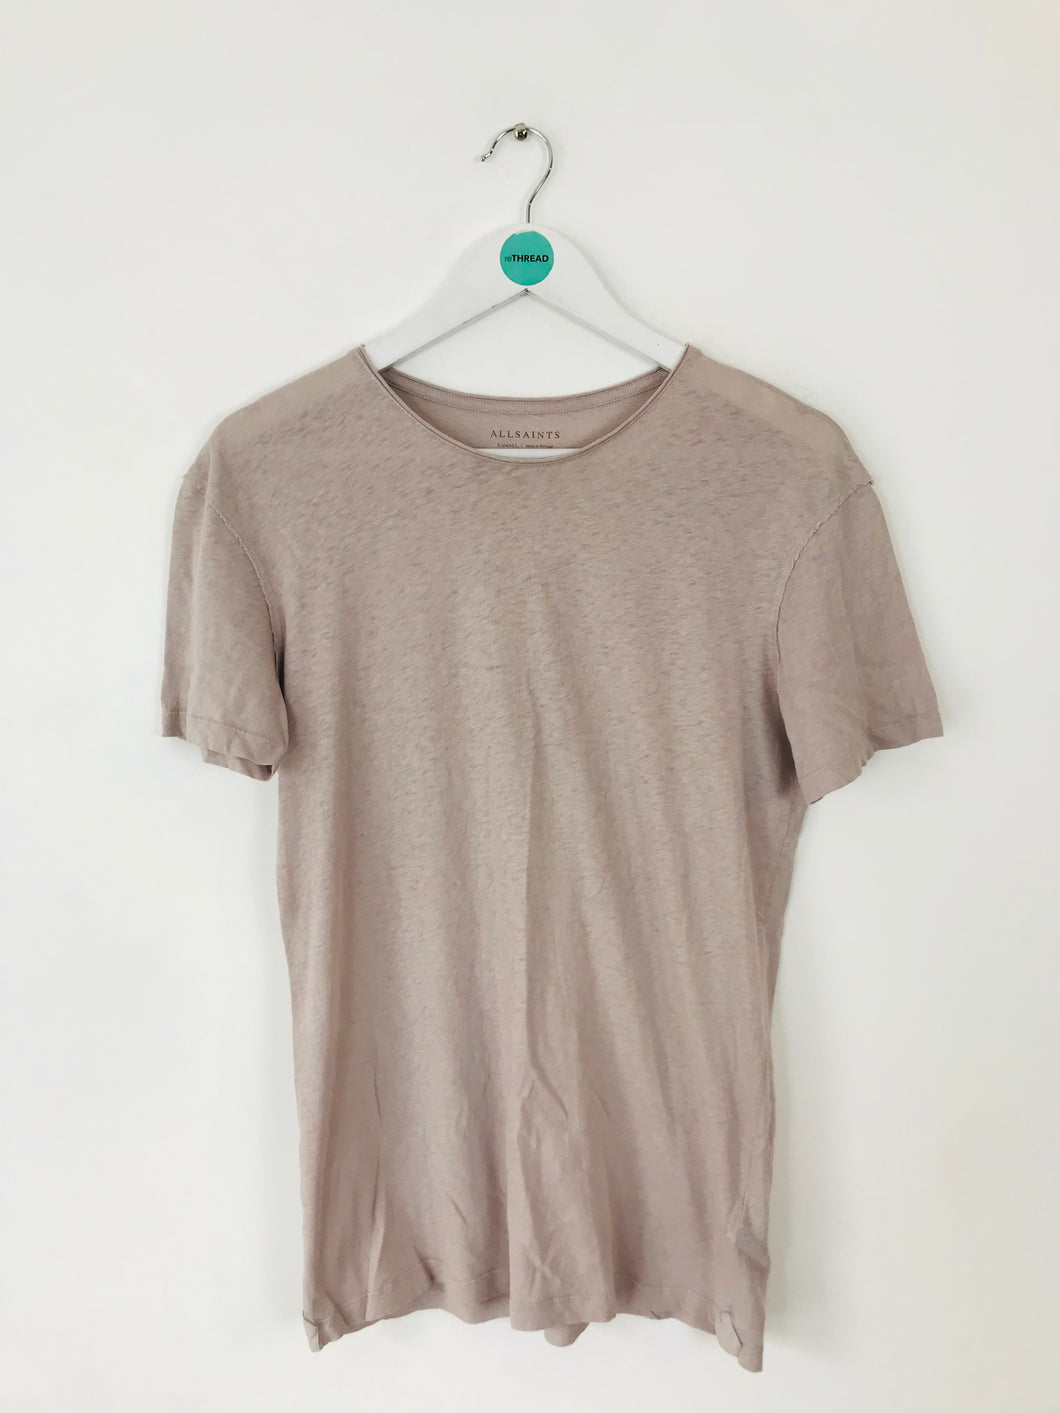 Allsaints Women’s Jersey T-Shirt Top | XS | Beige